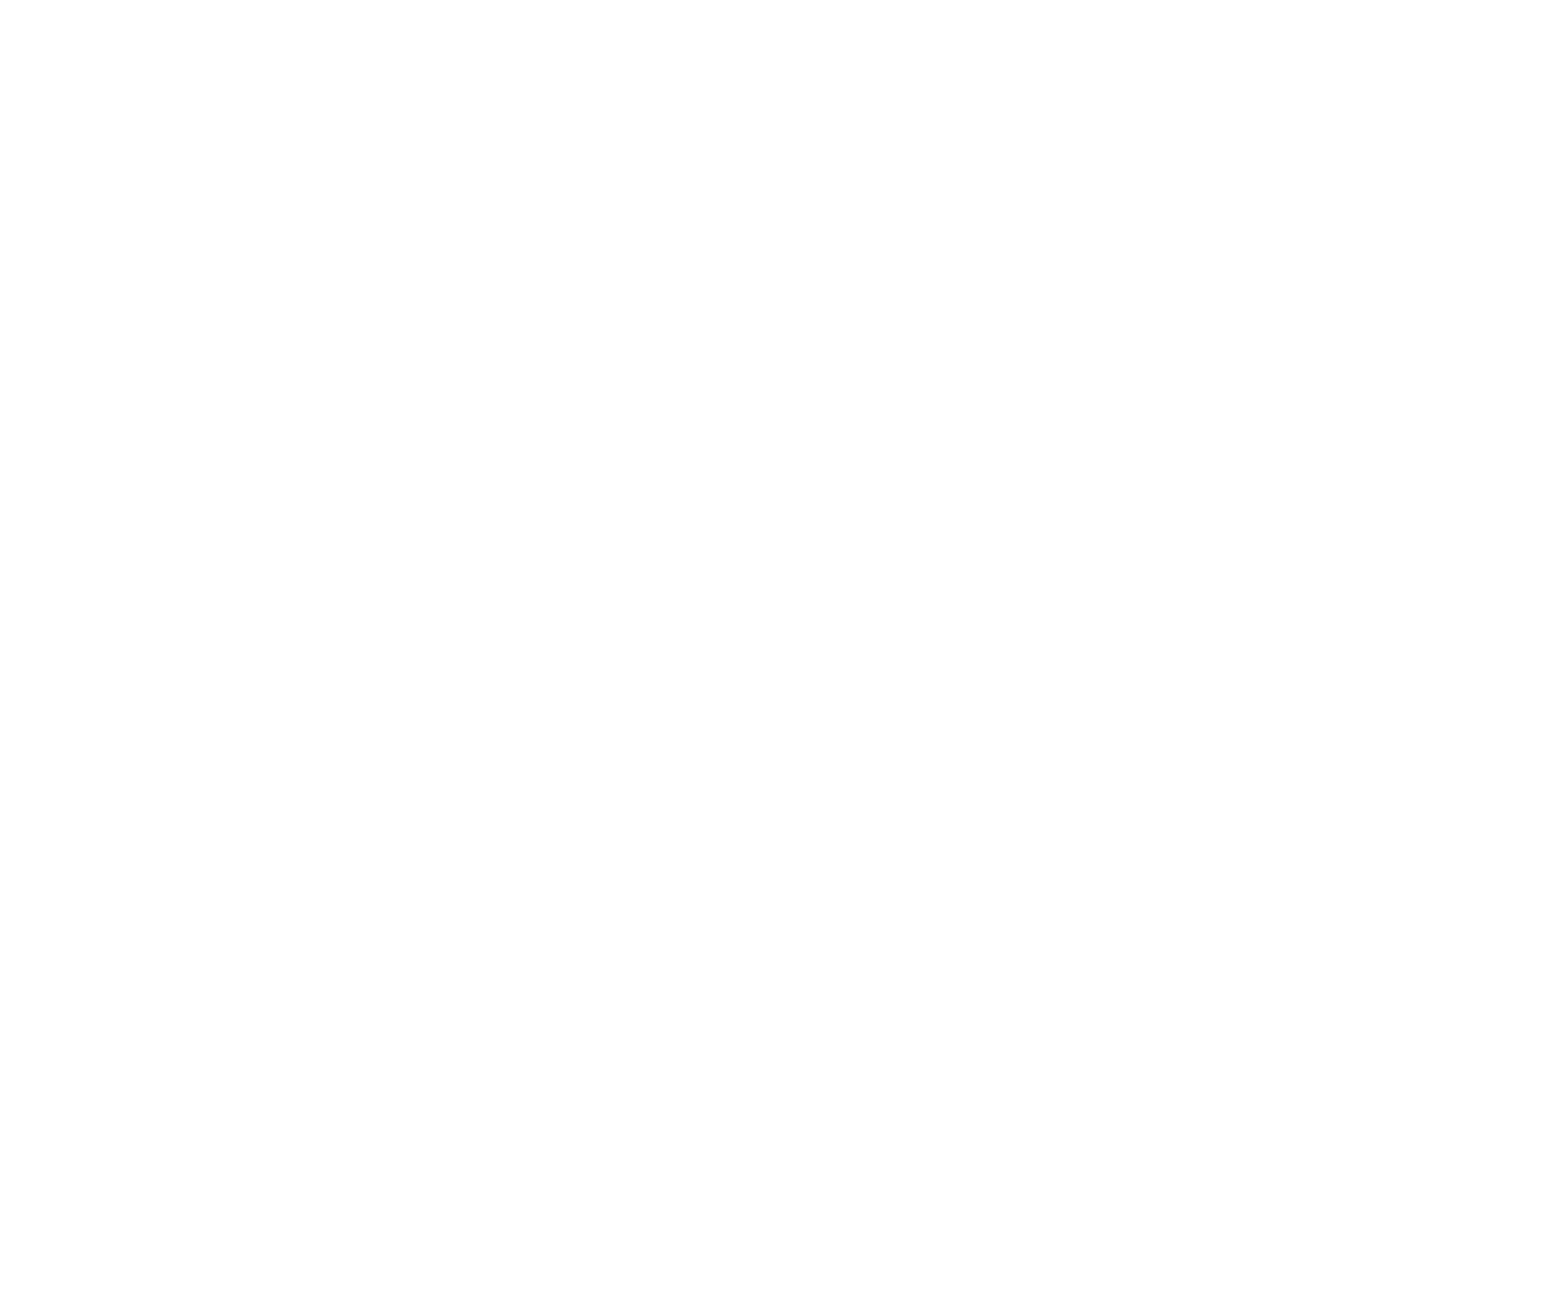 Consolidated Edison logo pour fonds sombres (PNG transparent)